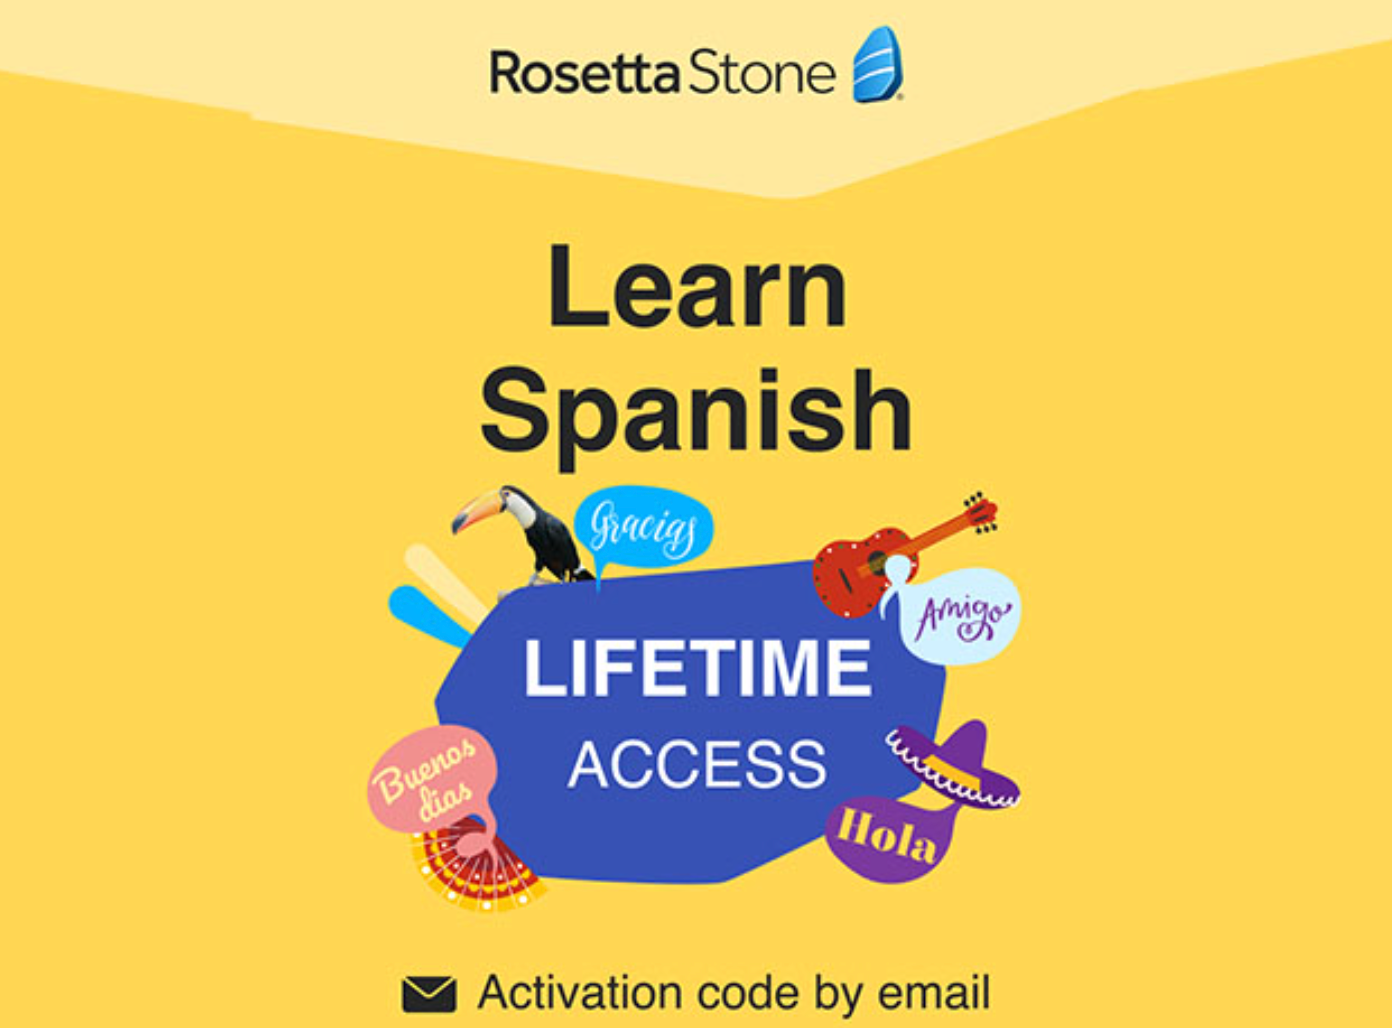 Rosetta Stone: Lifetime Subscription to Learn Spanish (Latin American) $96 (Digital Download)